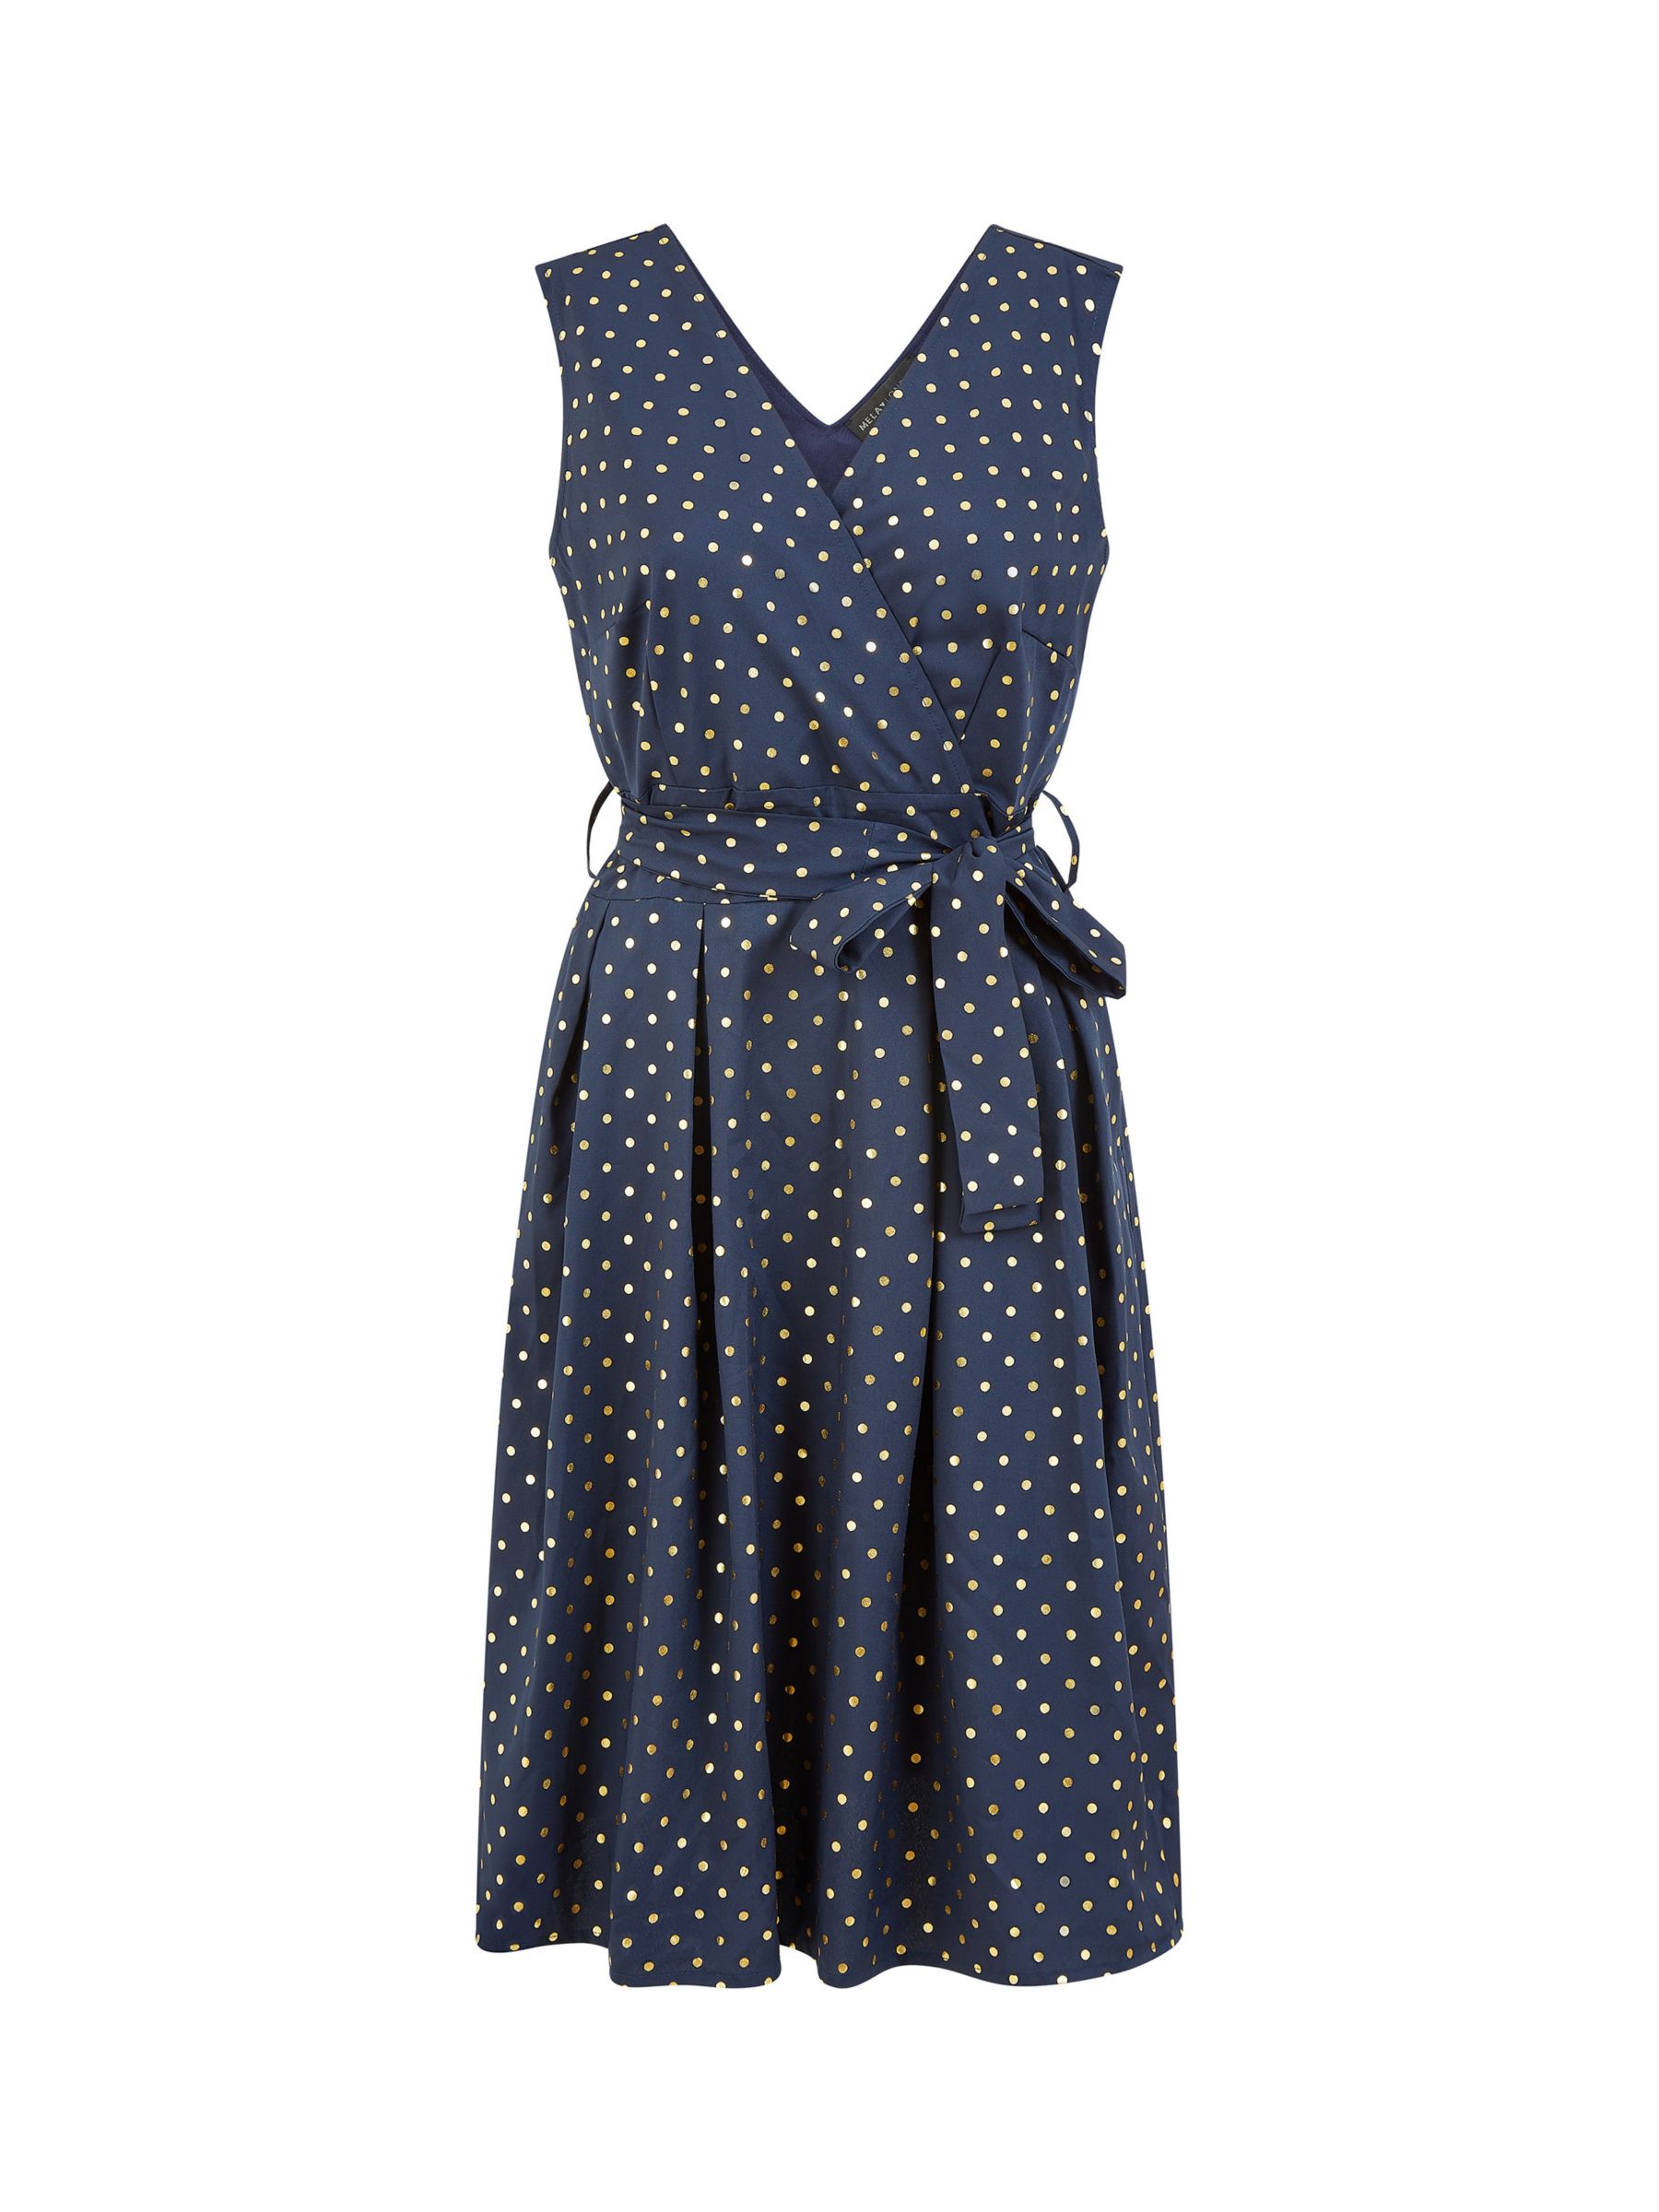 Buy Yumi Mela London Polka Dot Wrap Dress, Navy Online at johnlewis.com